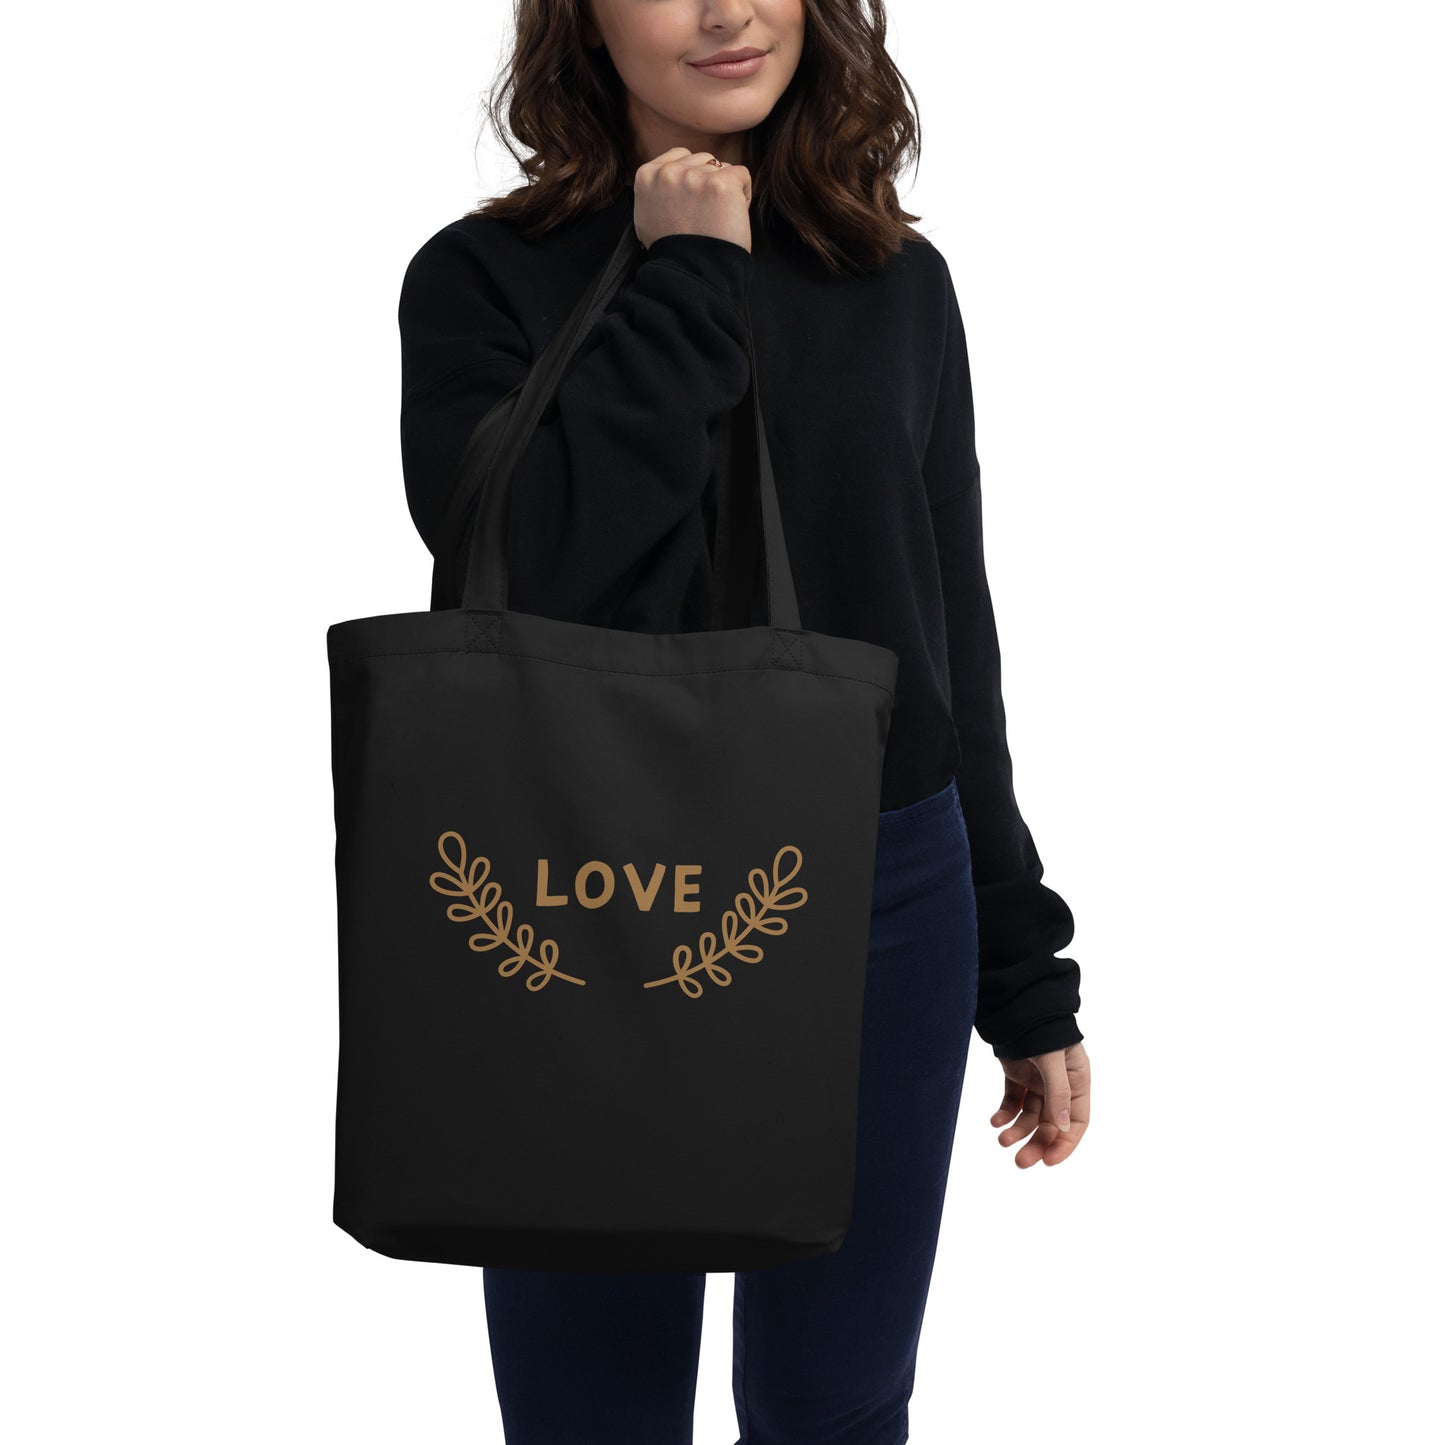 Eco Organic Cotton Tote Bag - LOVE emblem